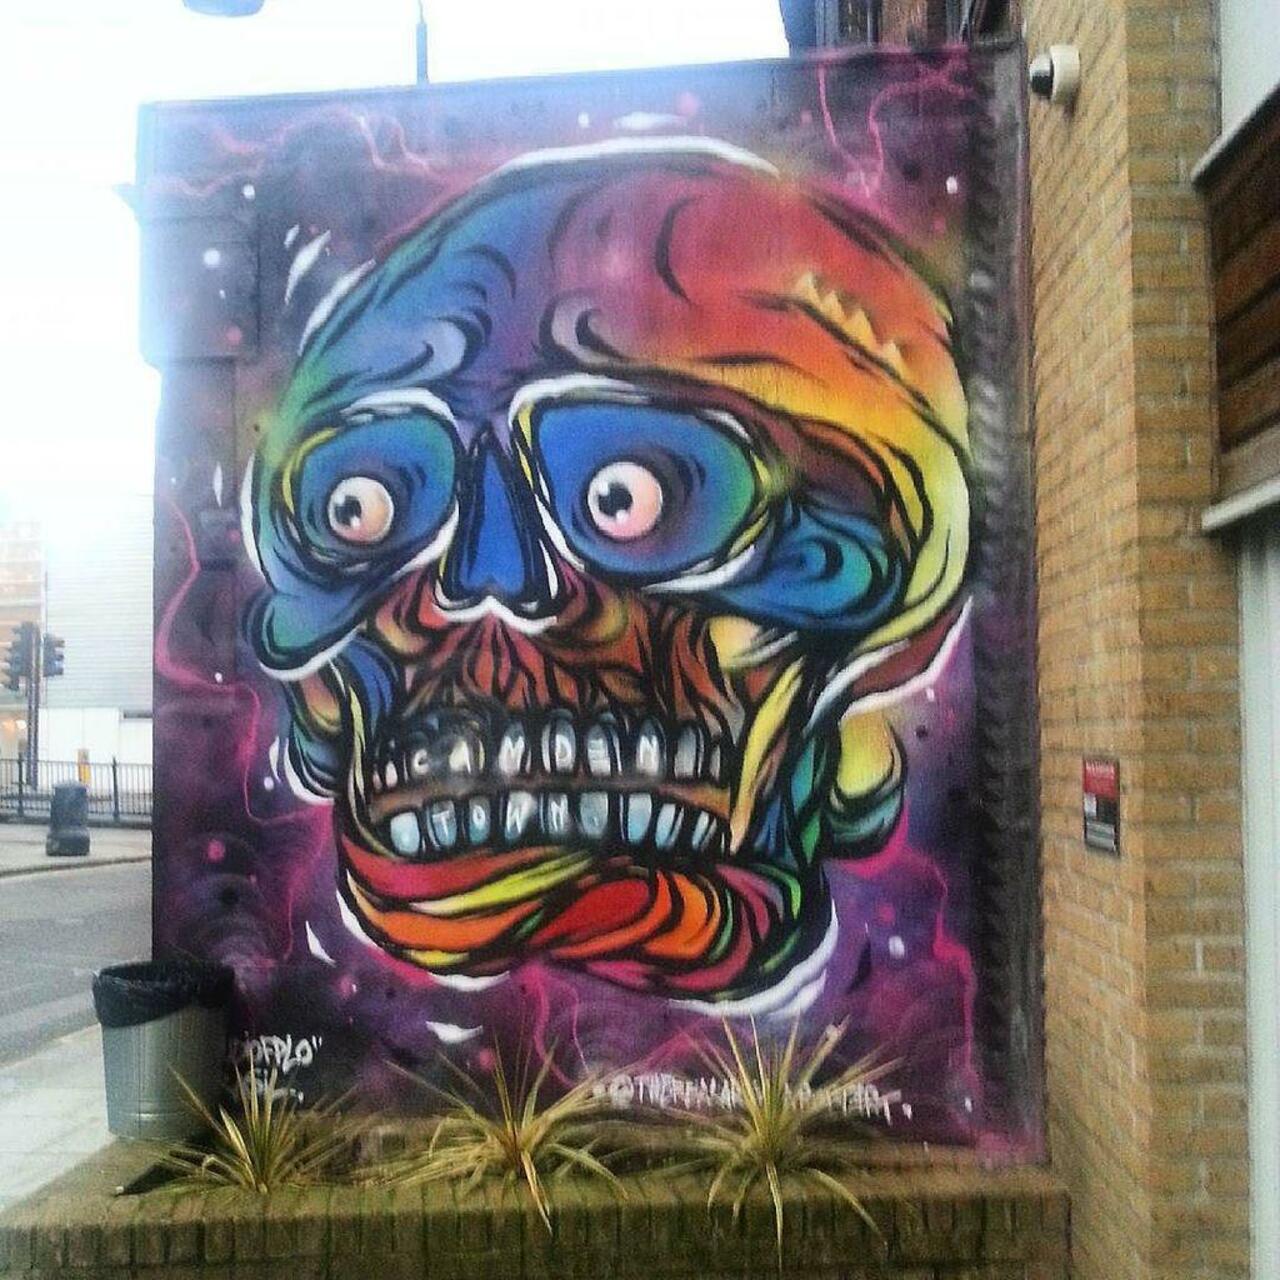 Art by FpLo  
#Graffiti #StreetArt #UrbanArt #FPLO #KentishTownRoad #Camden #London #GalaxyS3 #tv_streetart #rsa_g… http://t.co/wOigQo1NdK